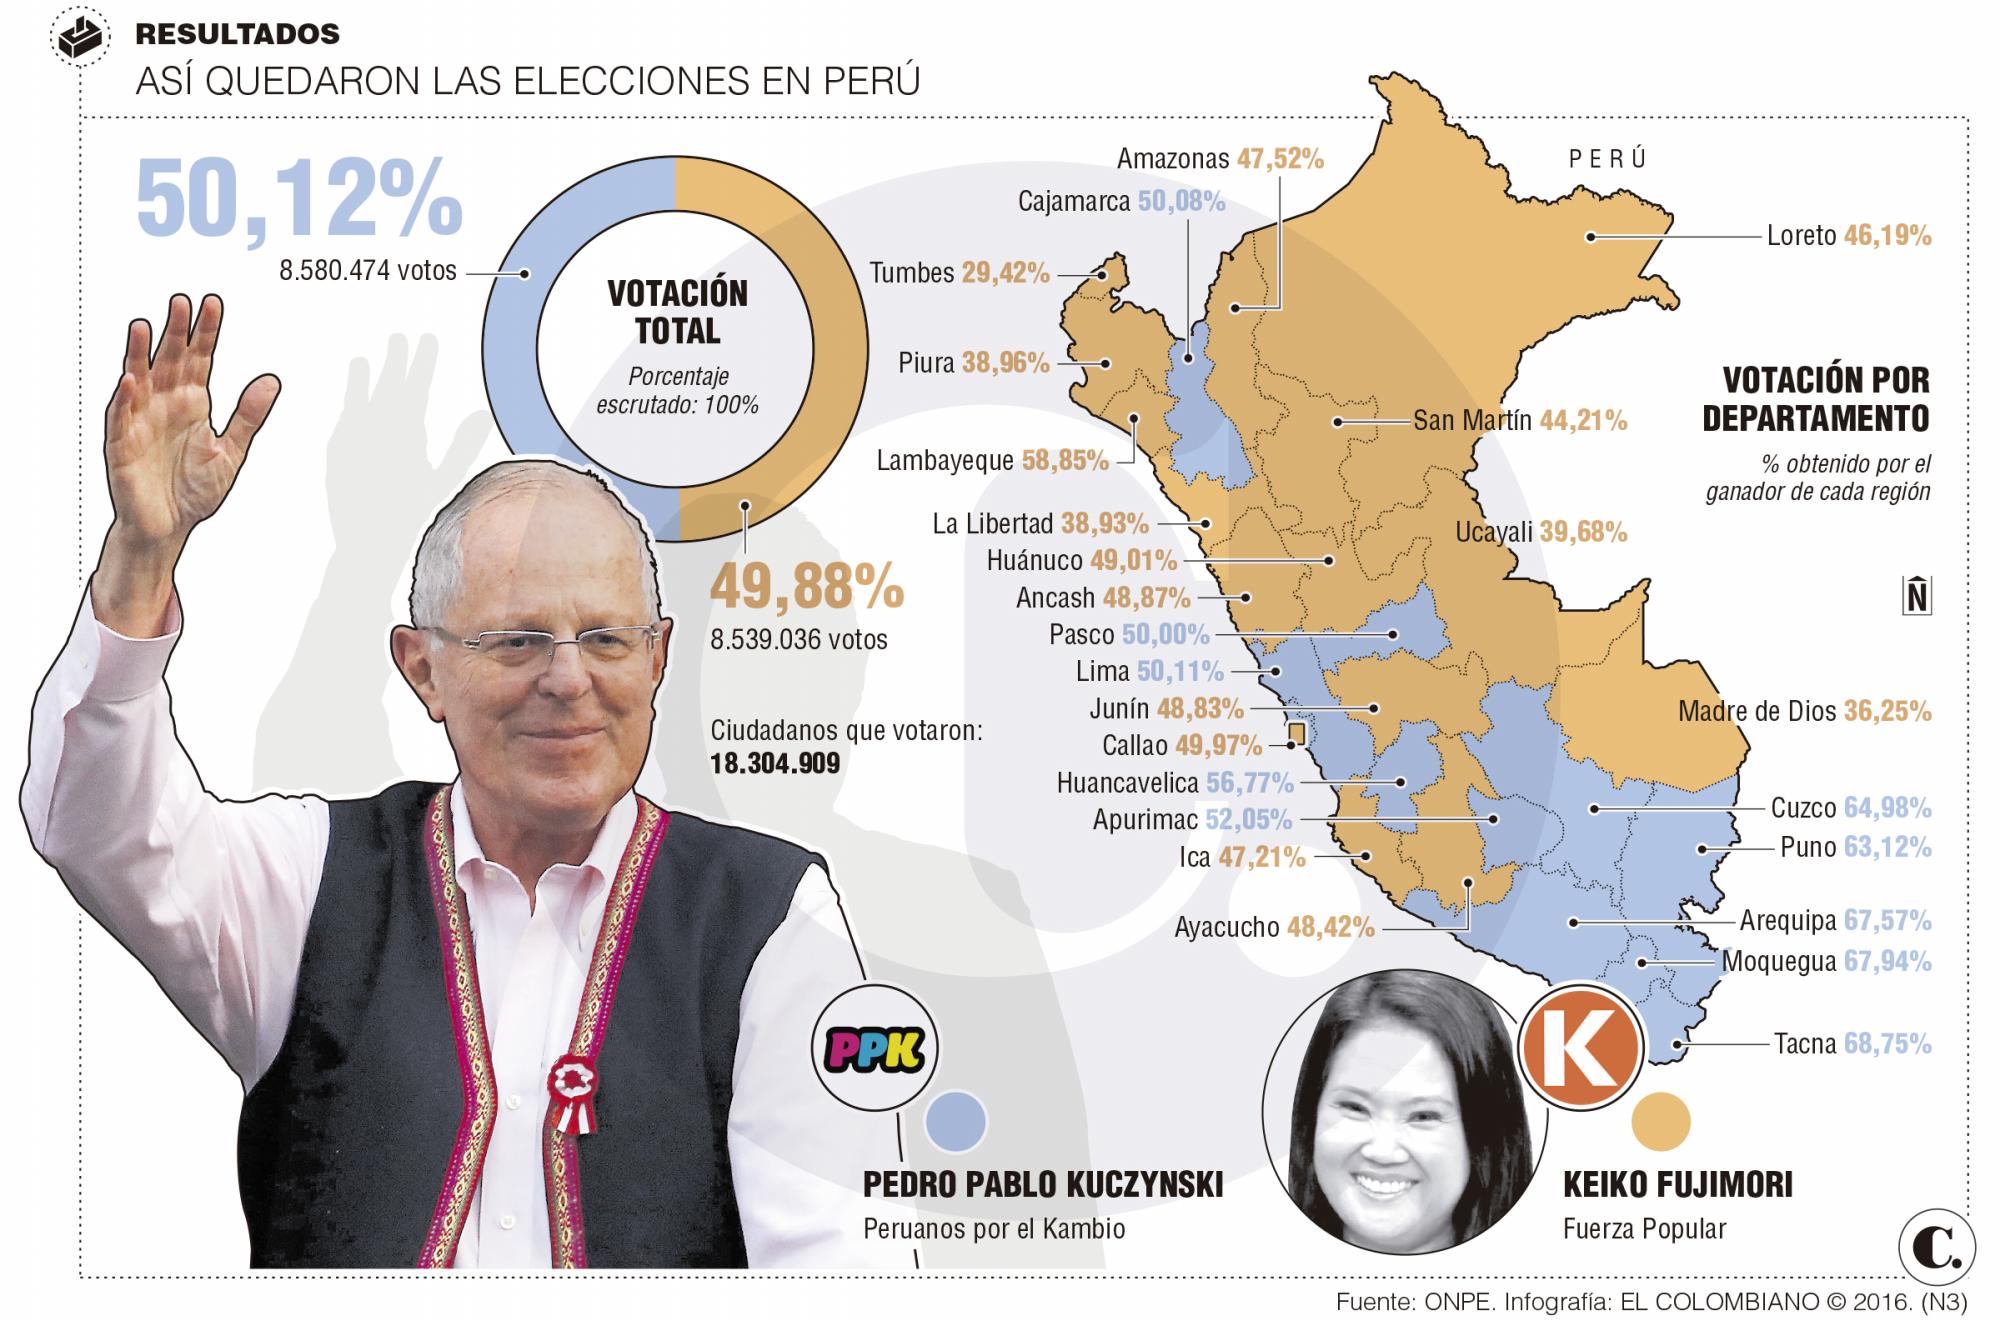 Kuczynski, el tecnócrata que gobernará en el Perú 